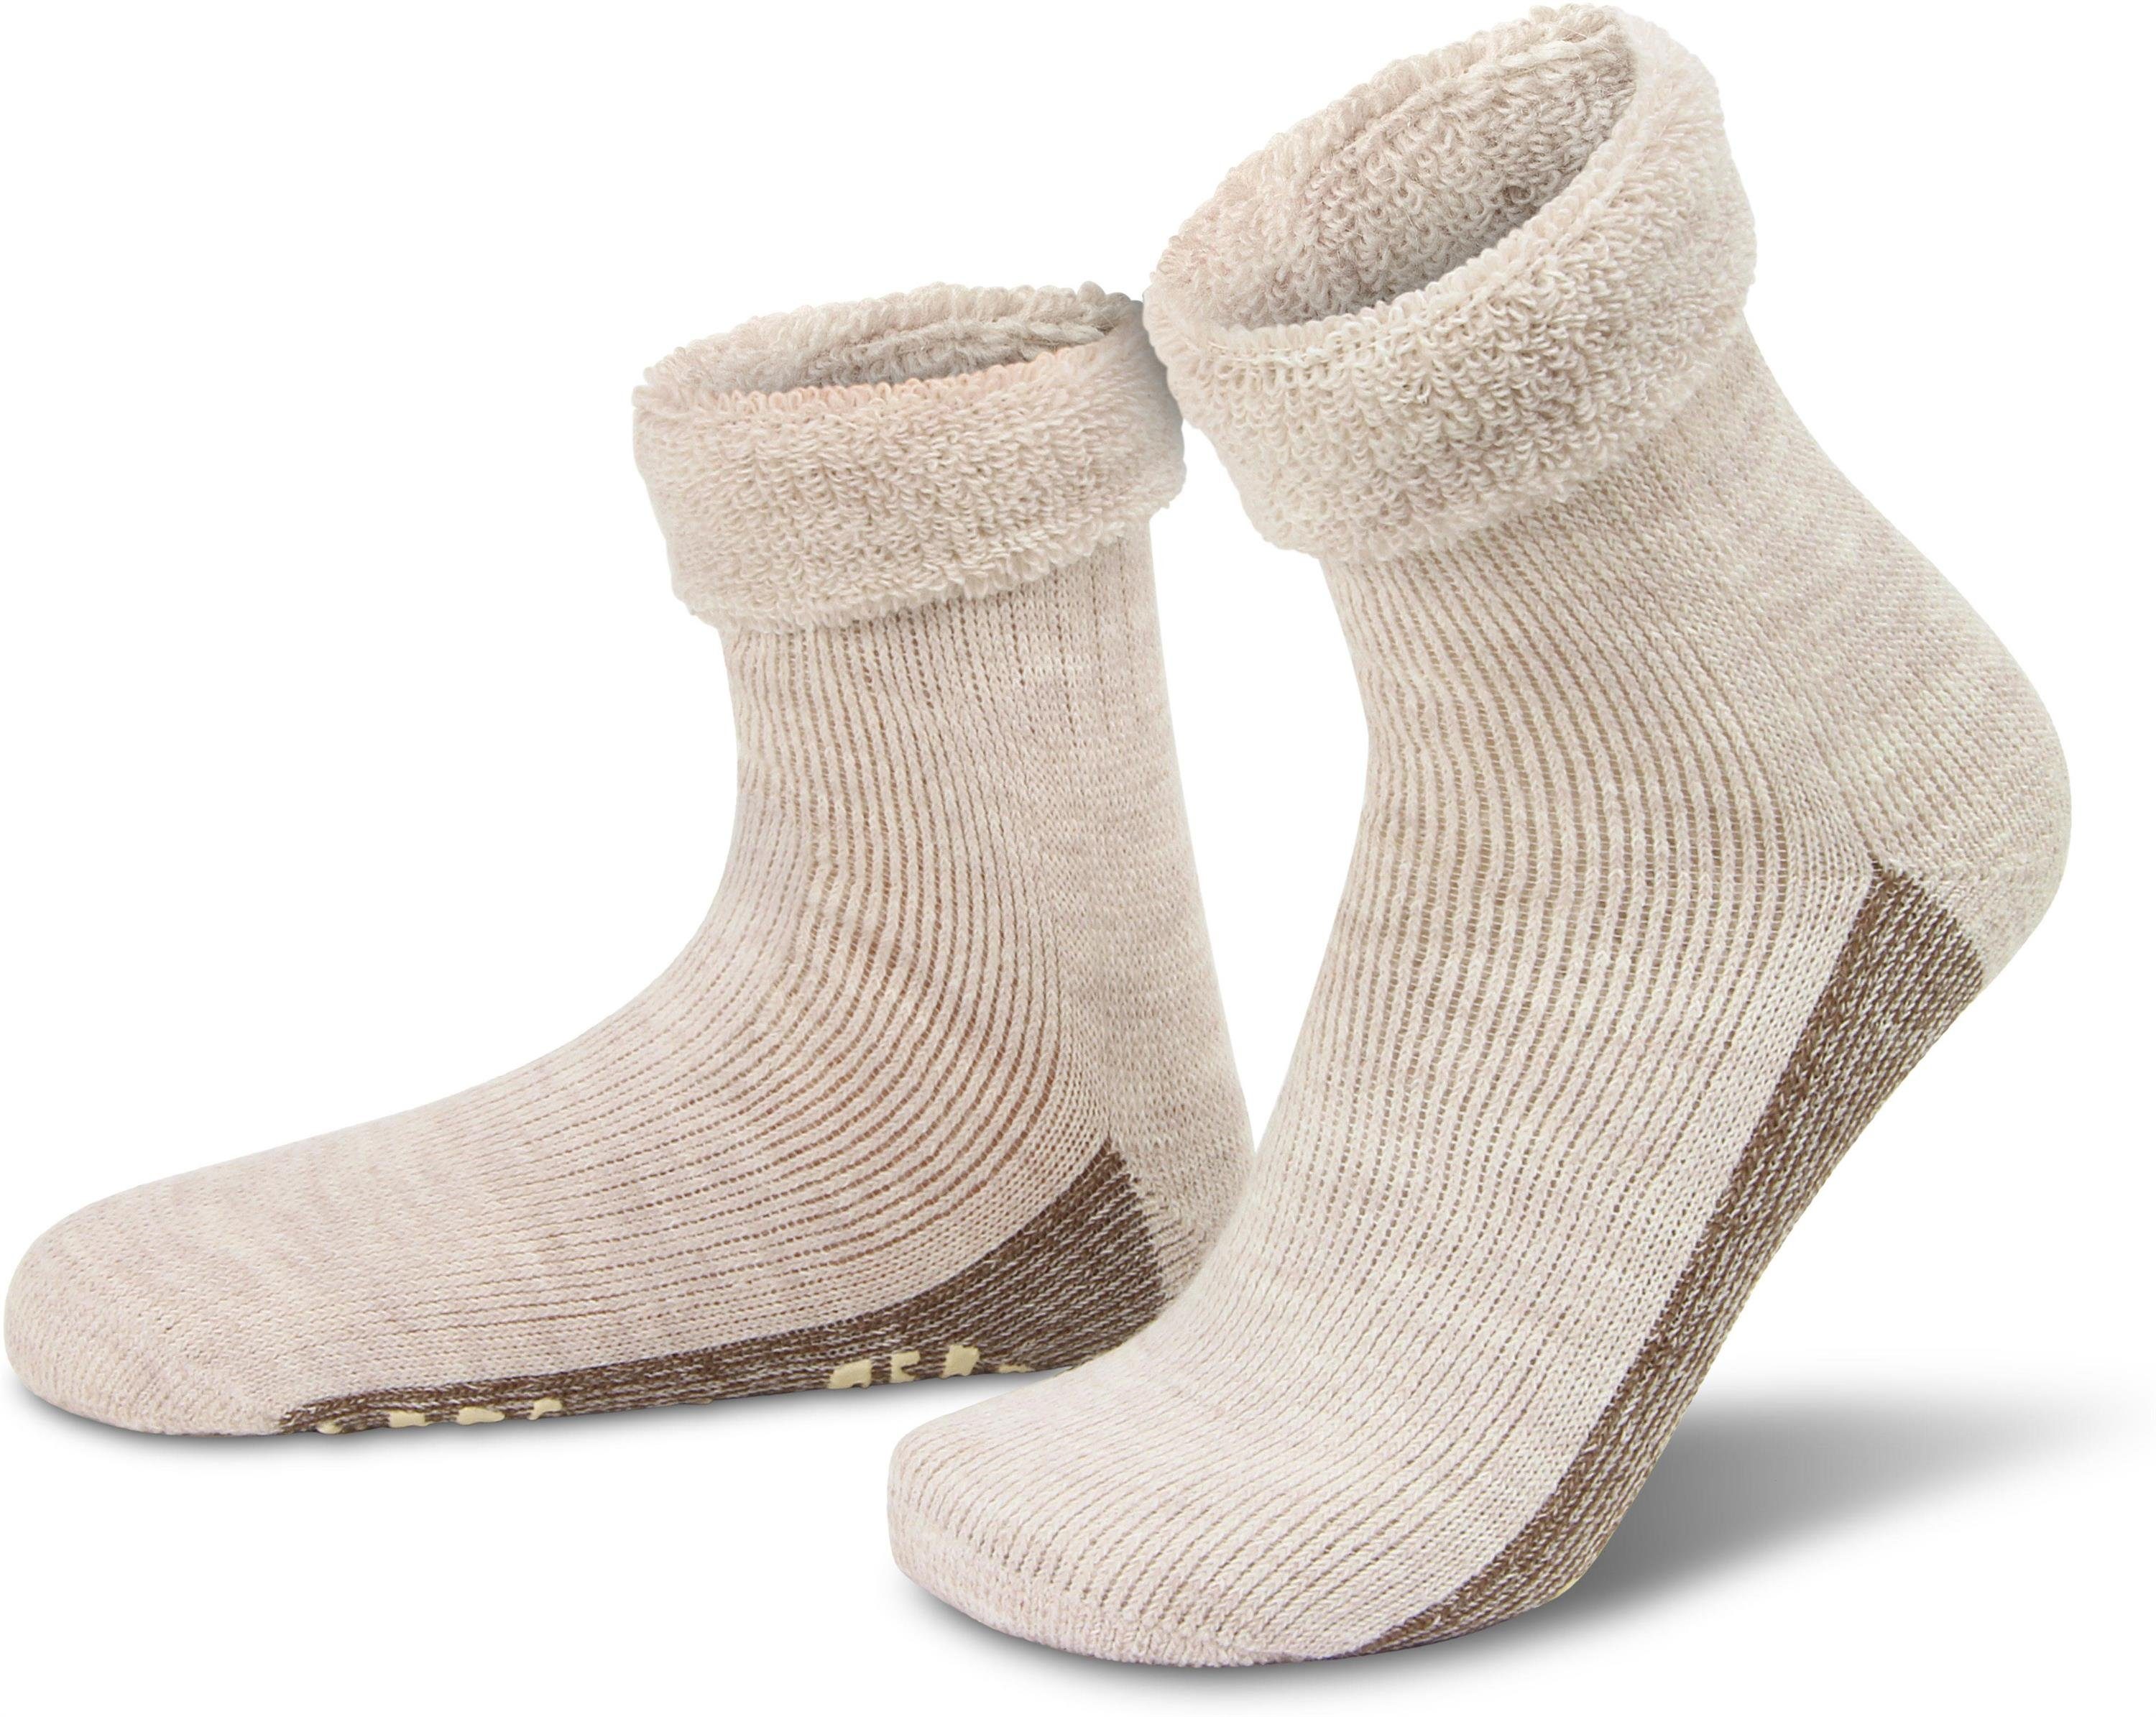 normani ABS-Socken Alpaka-Wollsocken mit ABS-Druck (1 Paar) hochwertige Alpaka-Wolle Natur